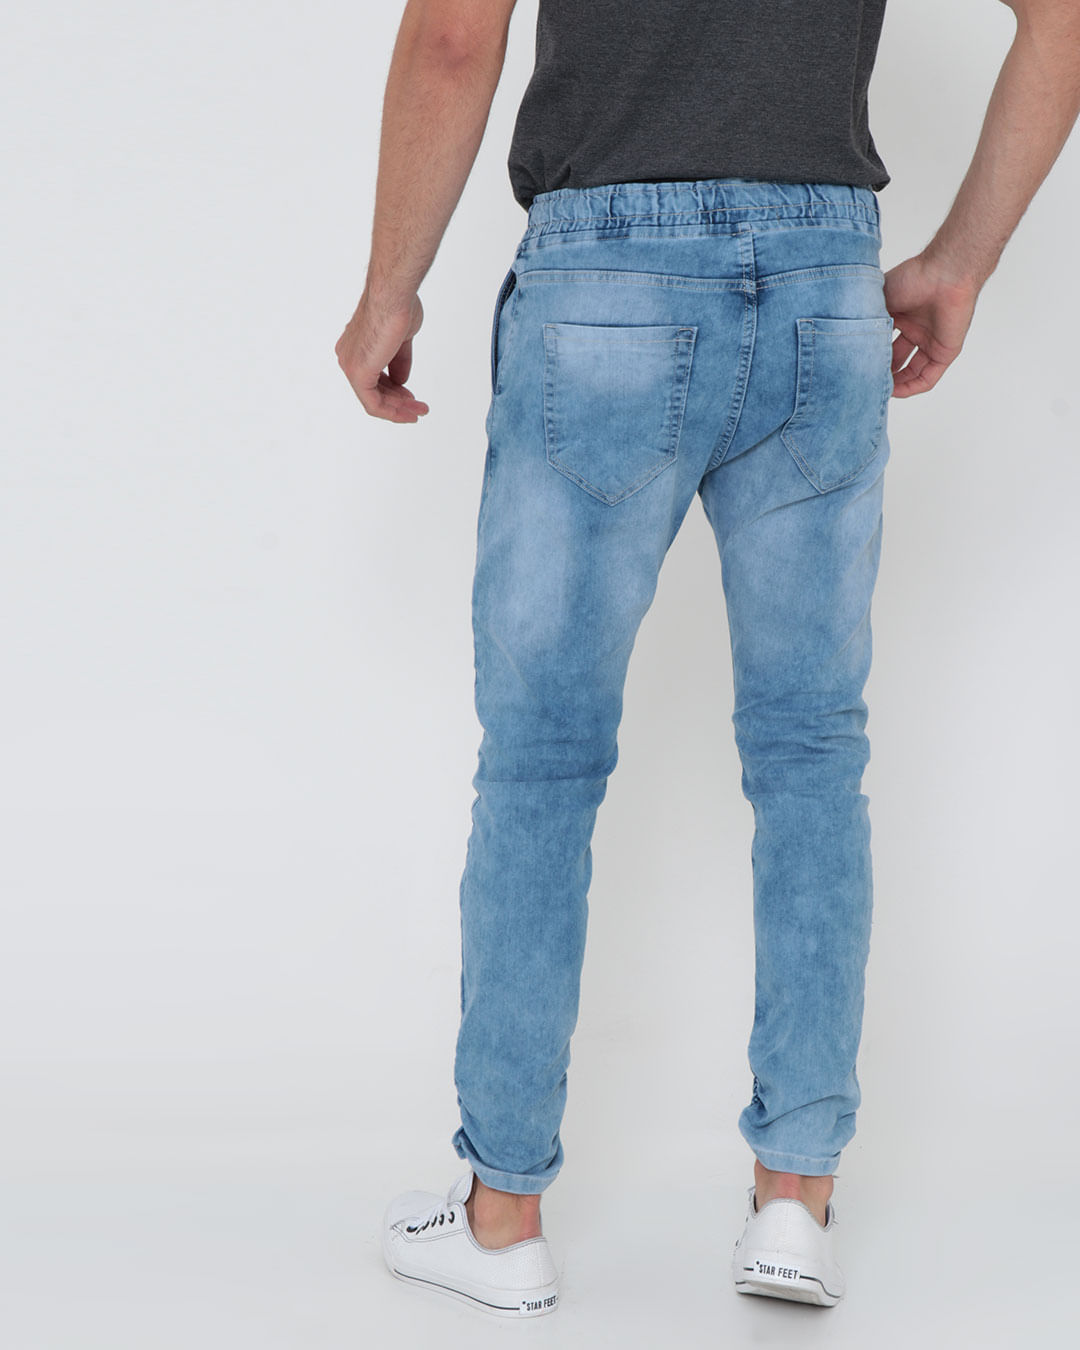 Calca-11032-Jeans-Franz-Perna-Jv---Blue-Jeans-Claro